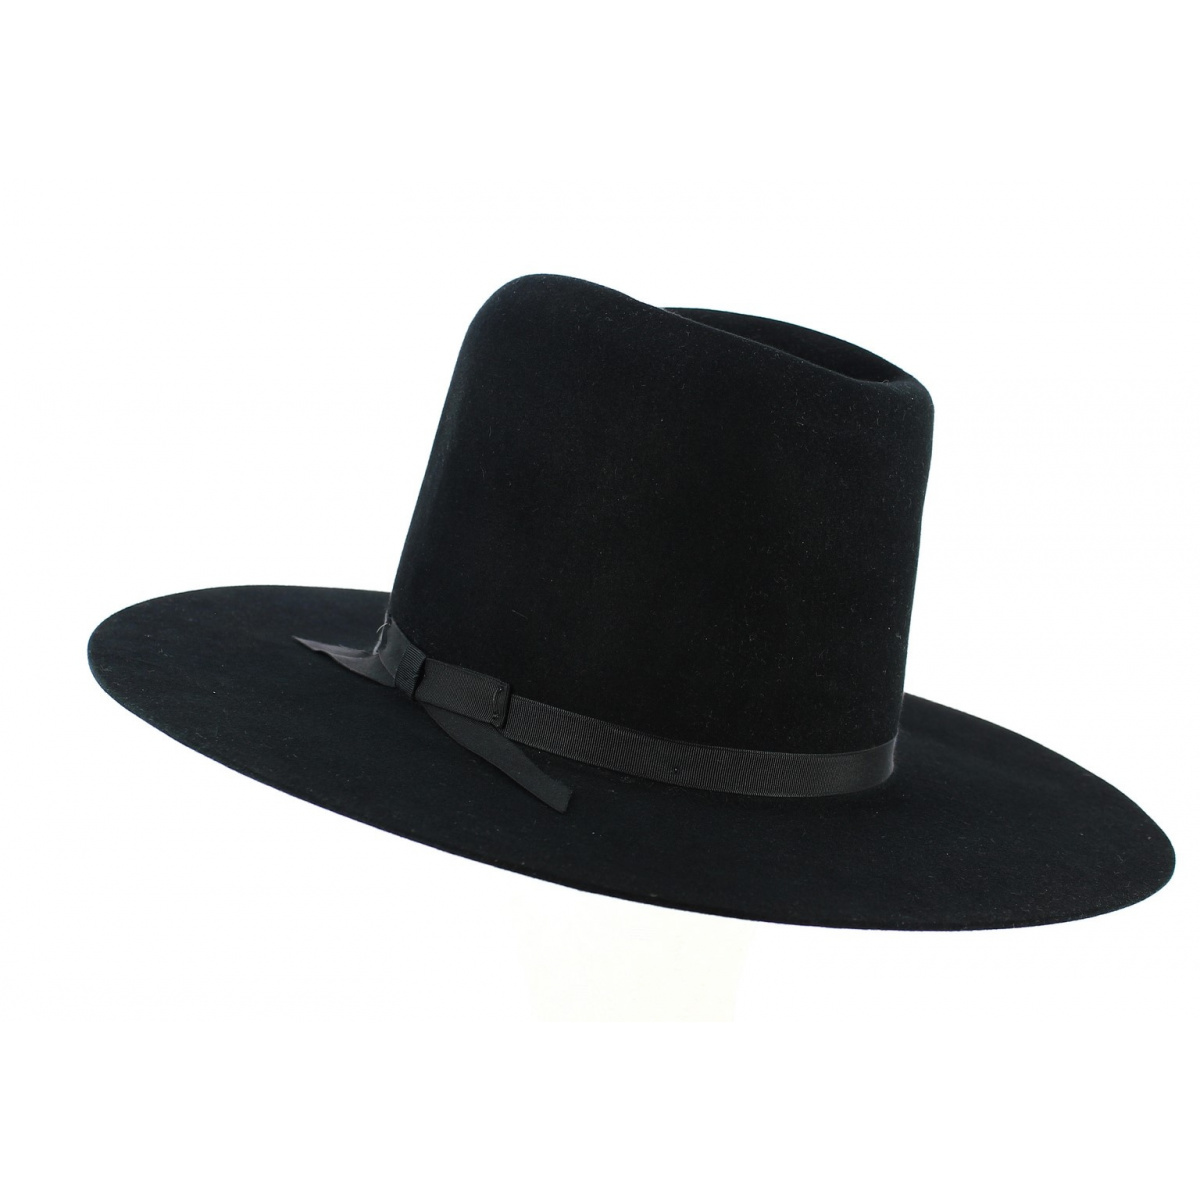 Signature Tasya Van Ree x Stetson Hat Black